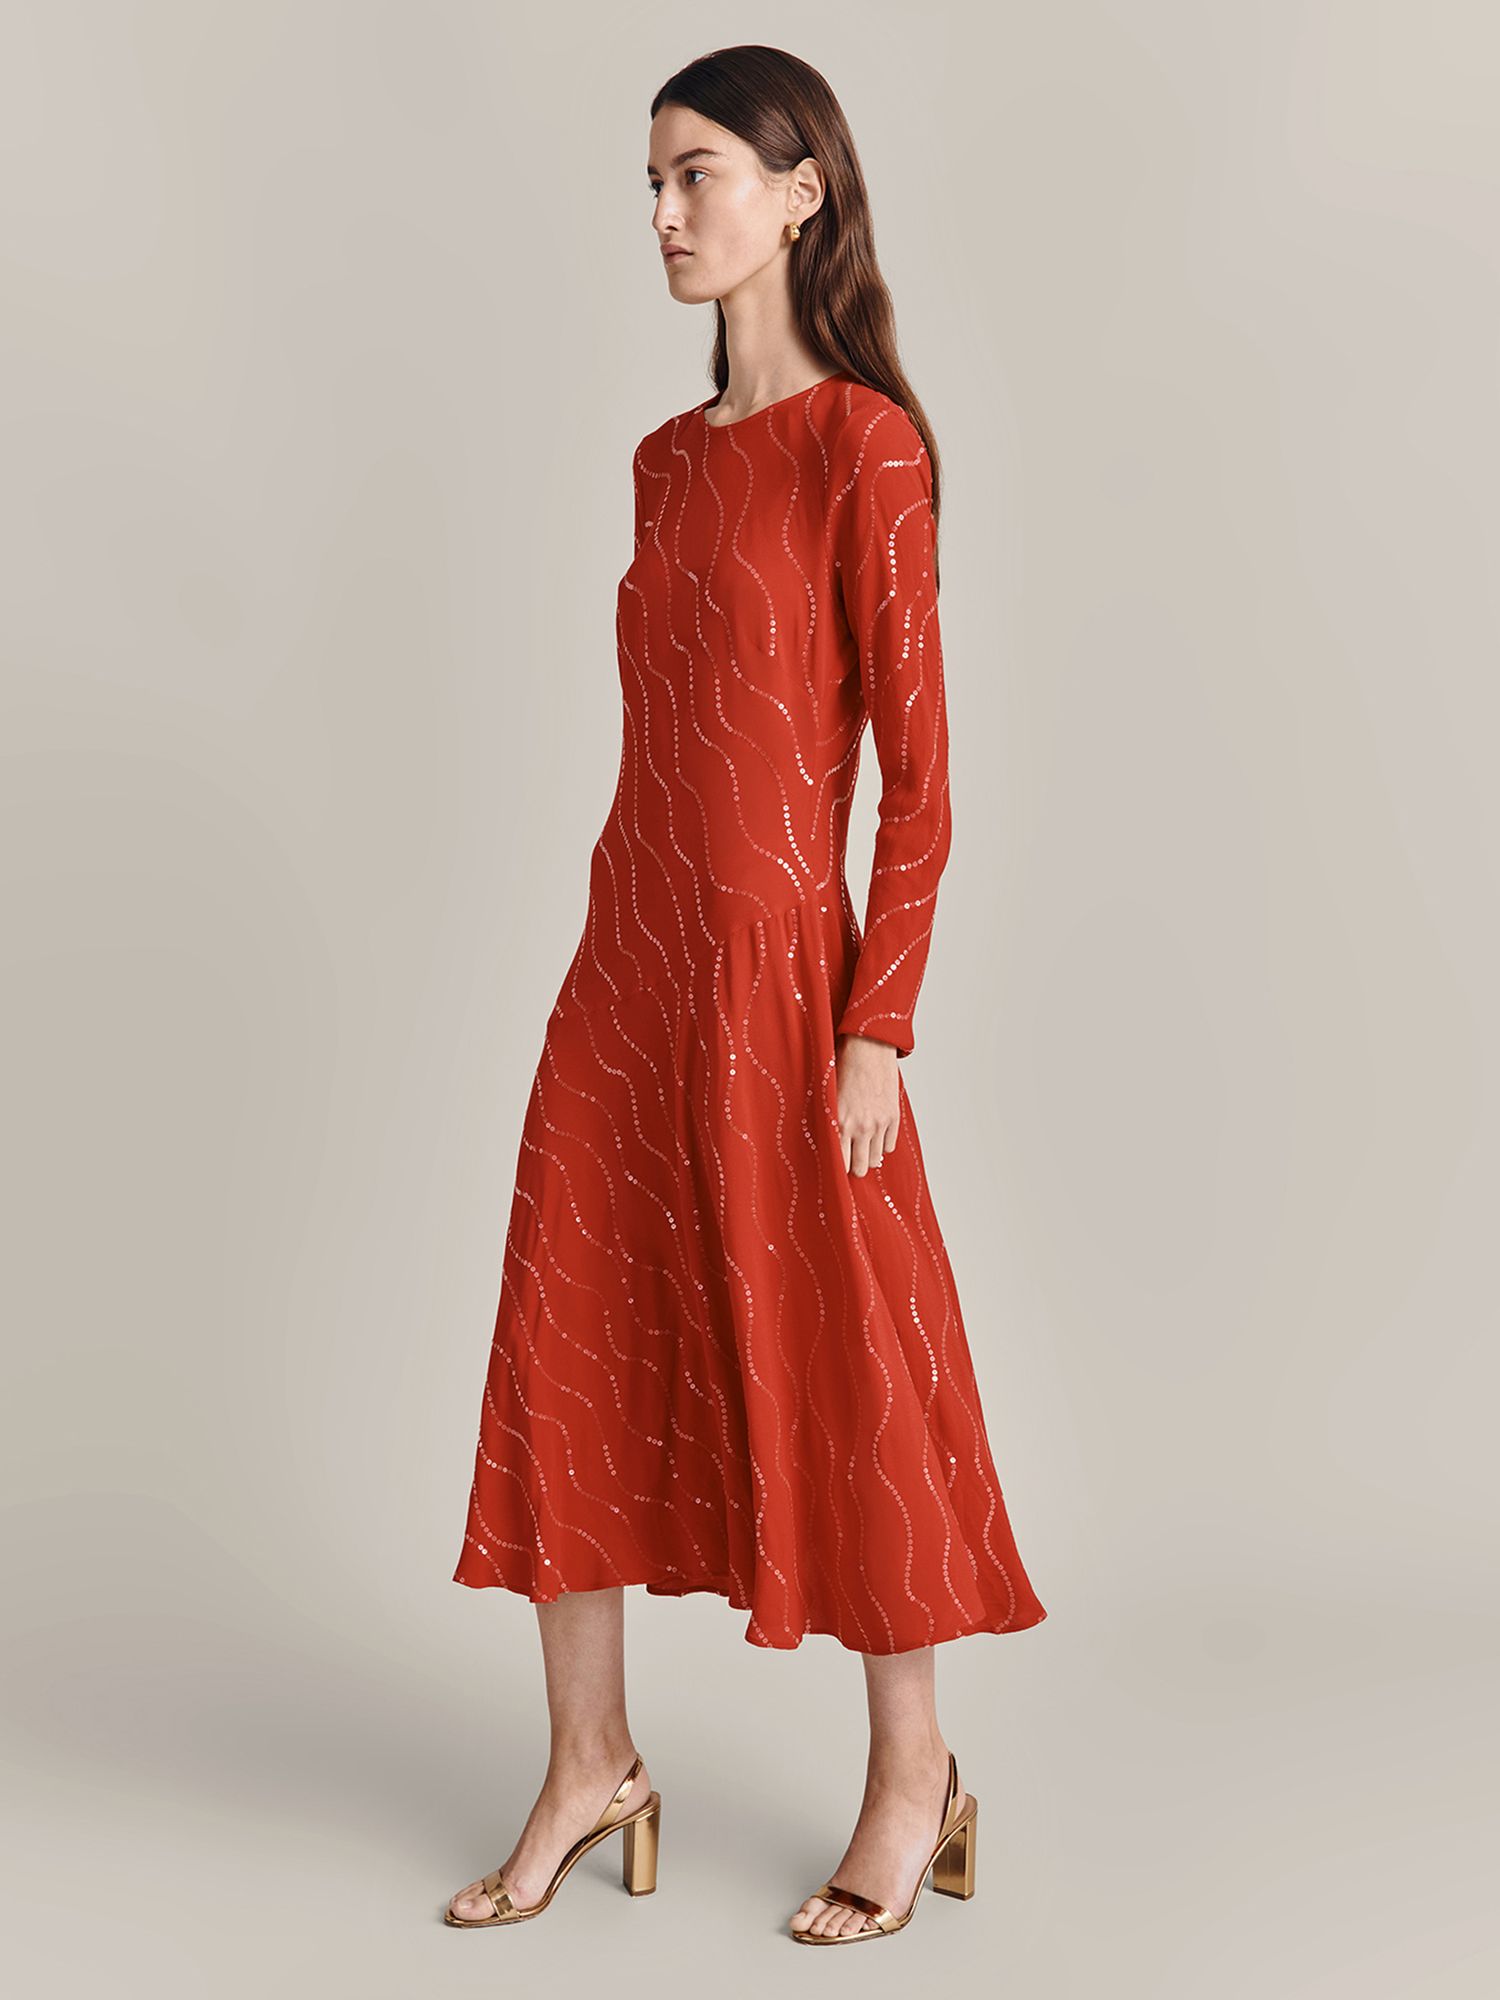 Ghost Ophelia Embellished Midi Dress, Red, L